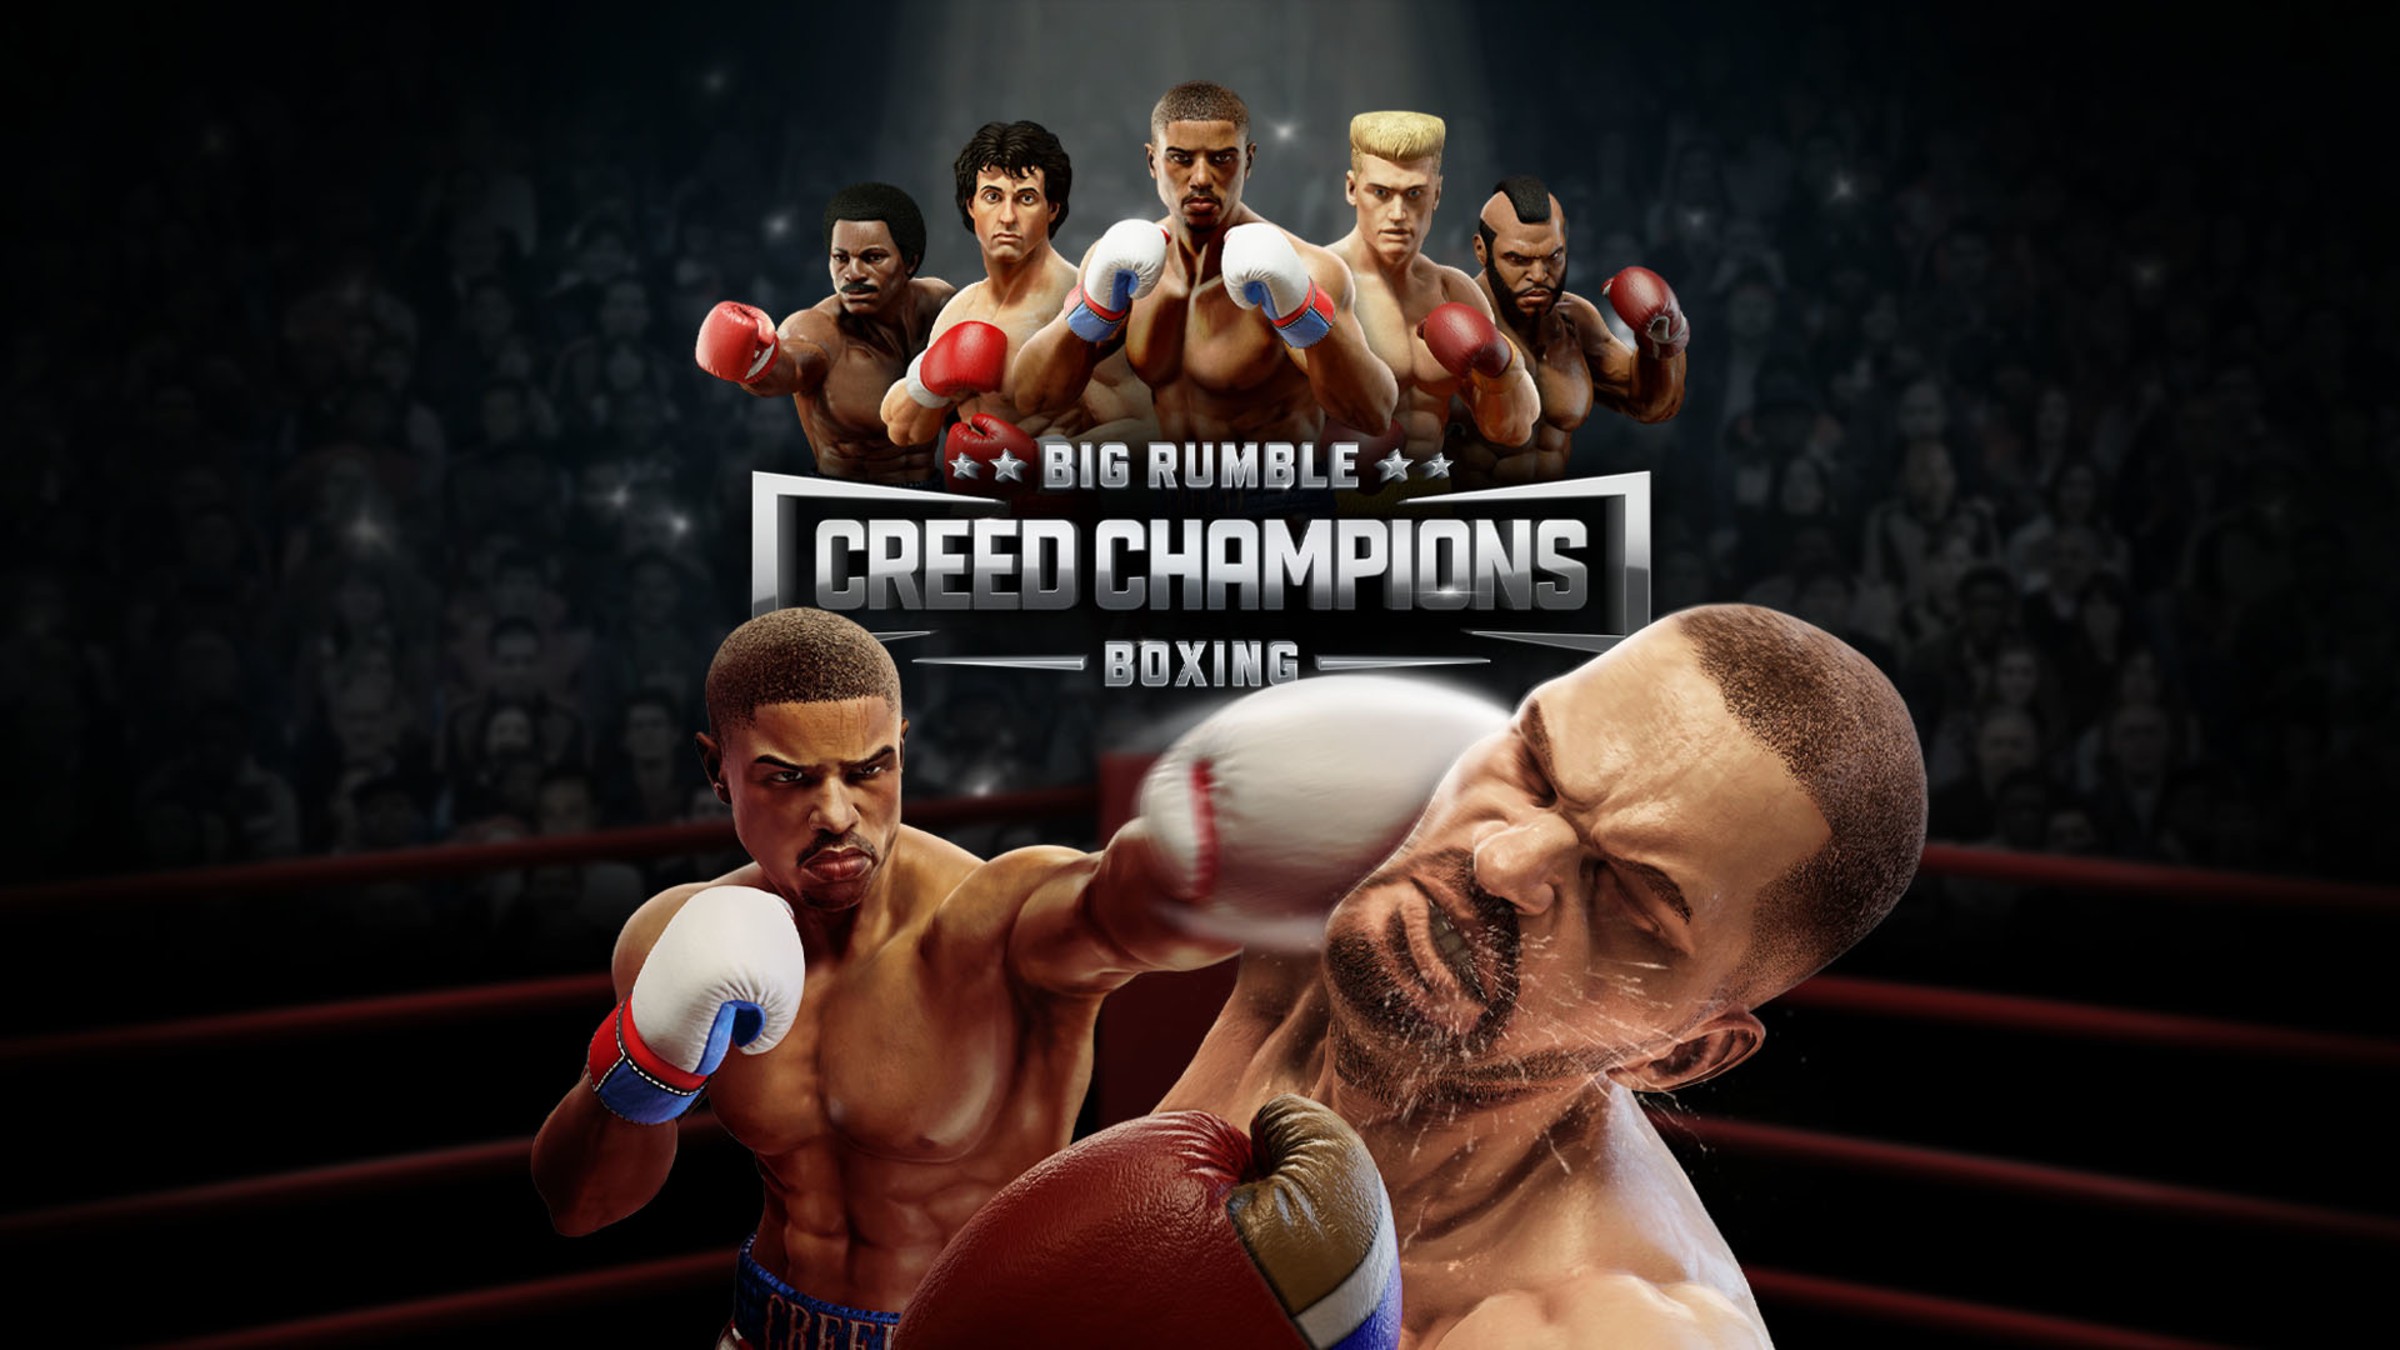 Creed Vence A Luta Big Rumble Boxing: Creed Champions para Nintendo Switch - Site Oficial da  Nintendo